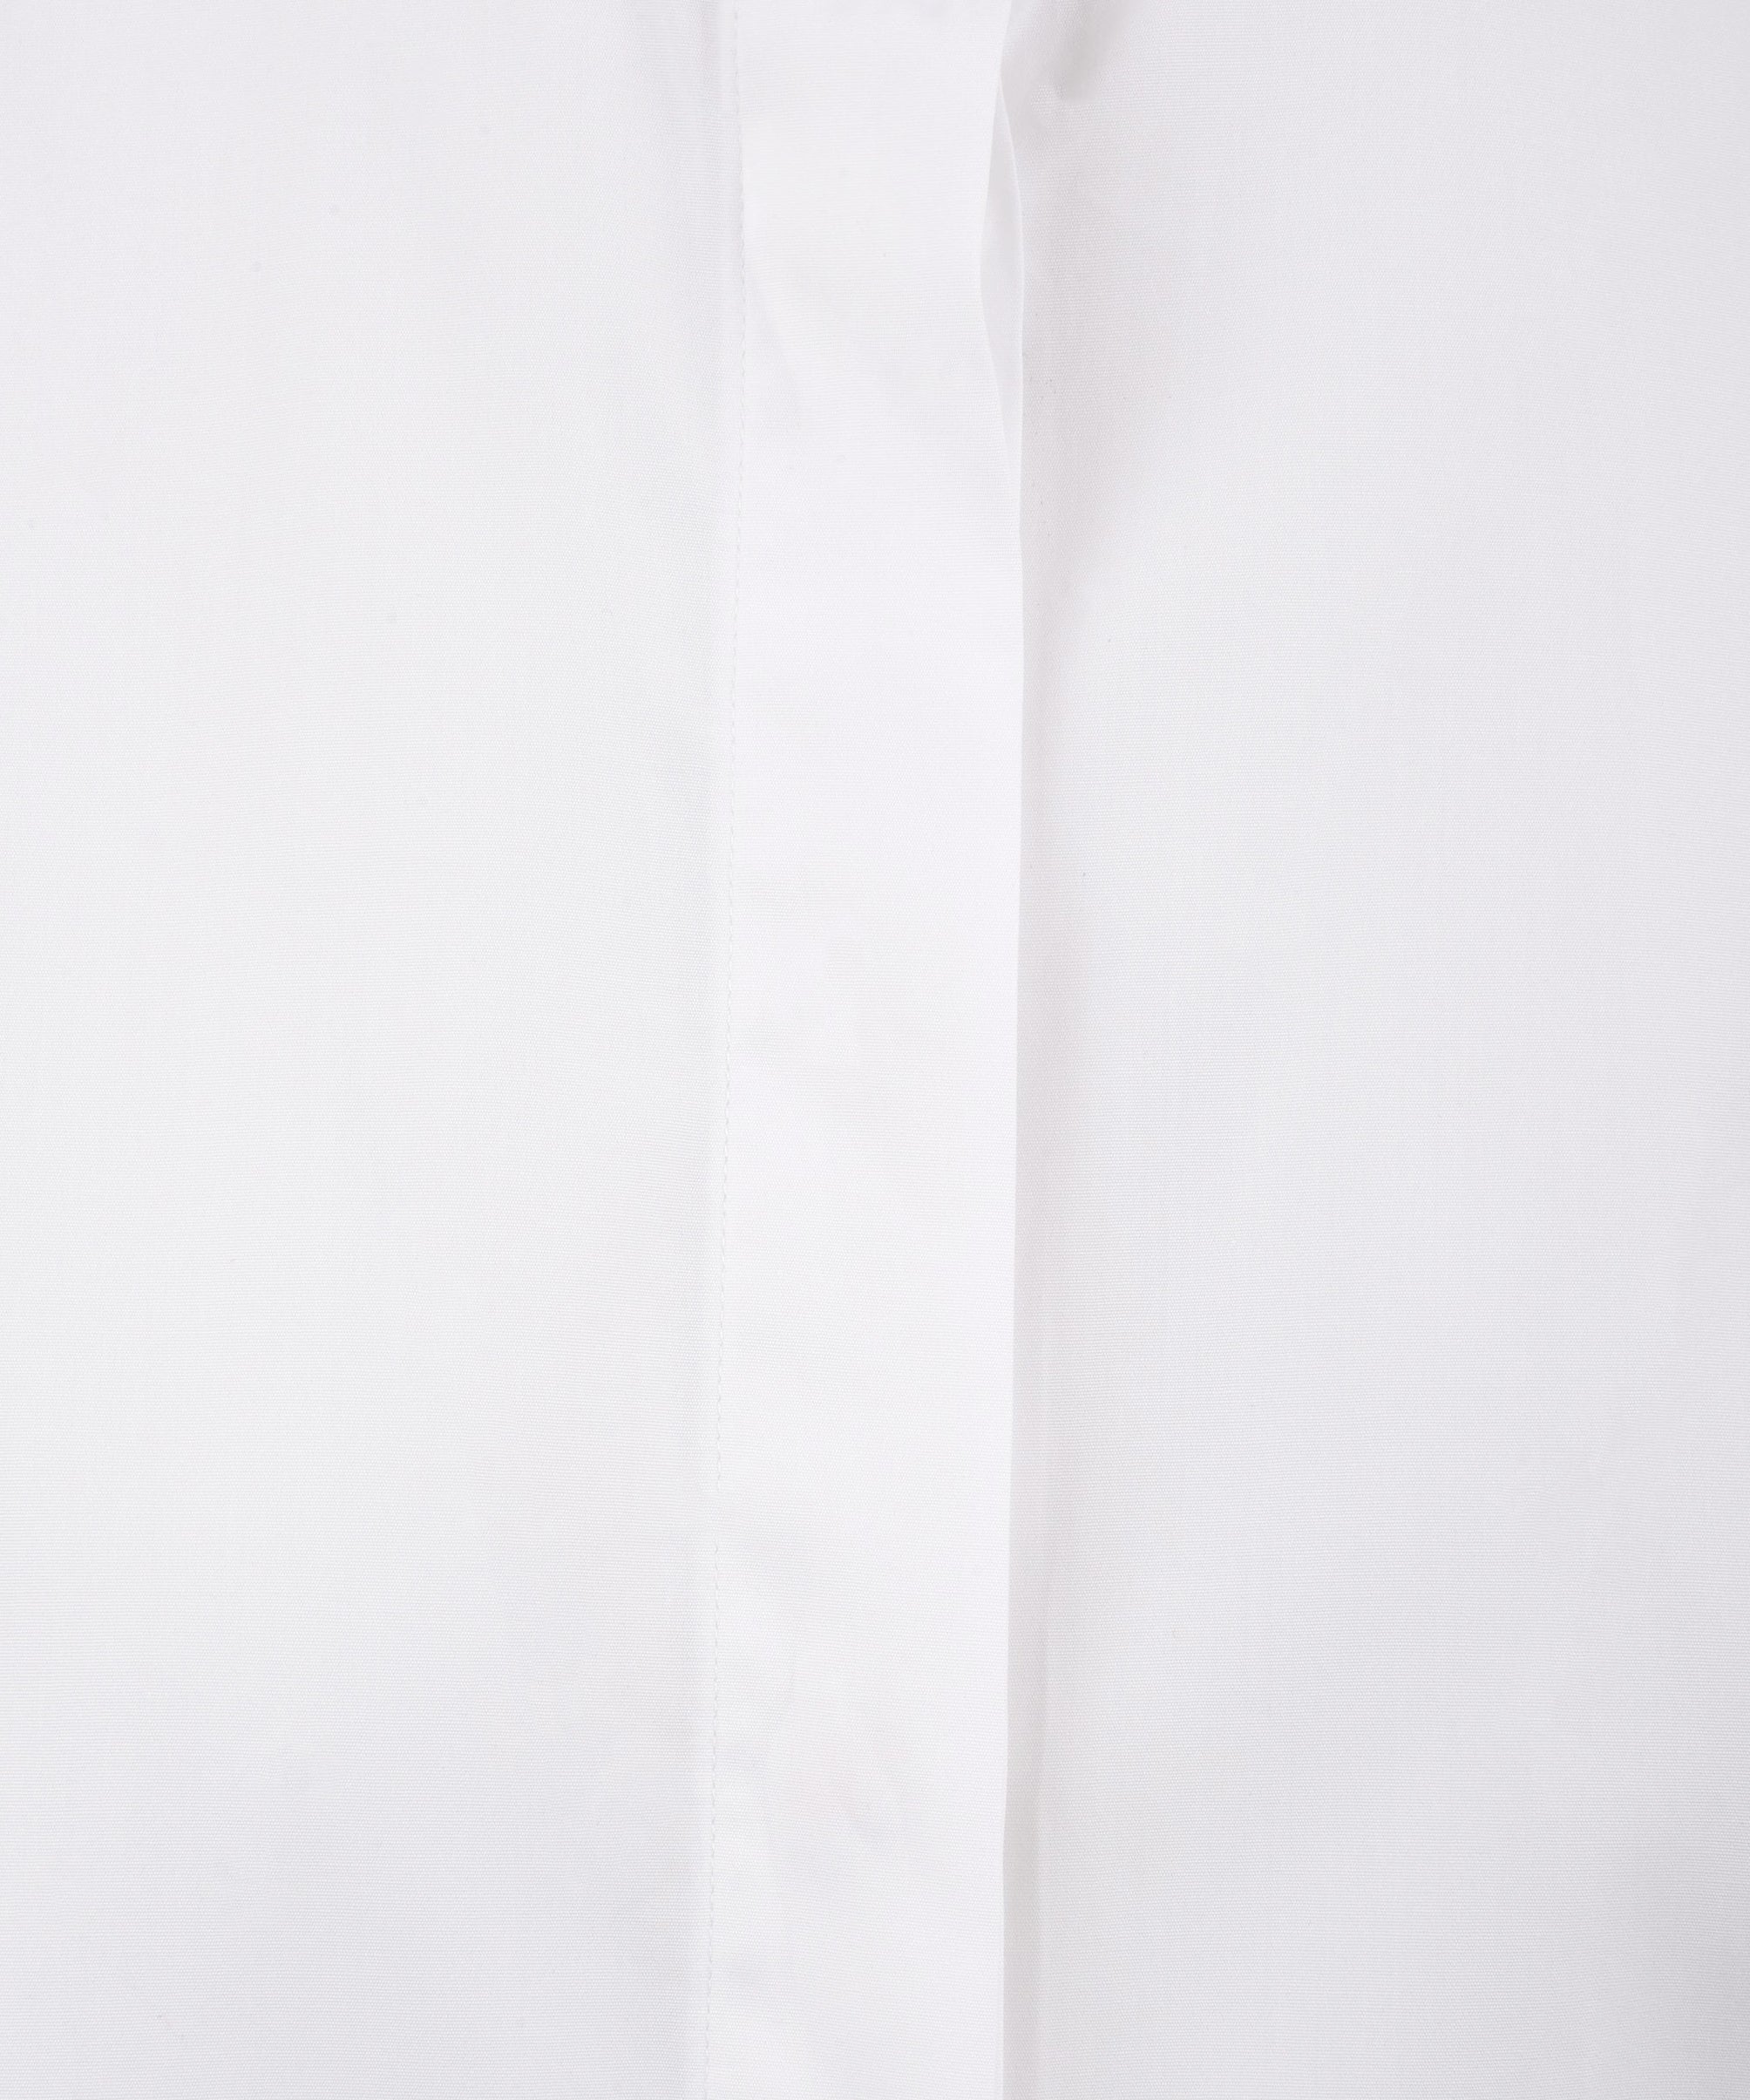 Camicia ASPESI Donna 5404 C118 Bianco